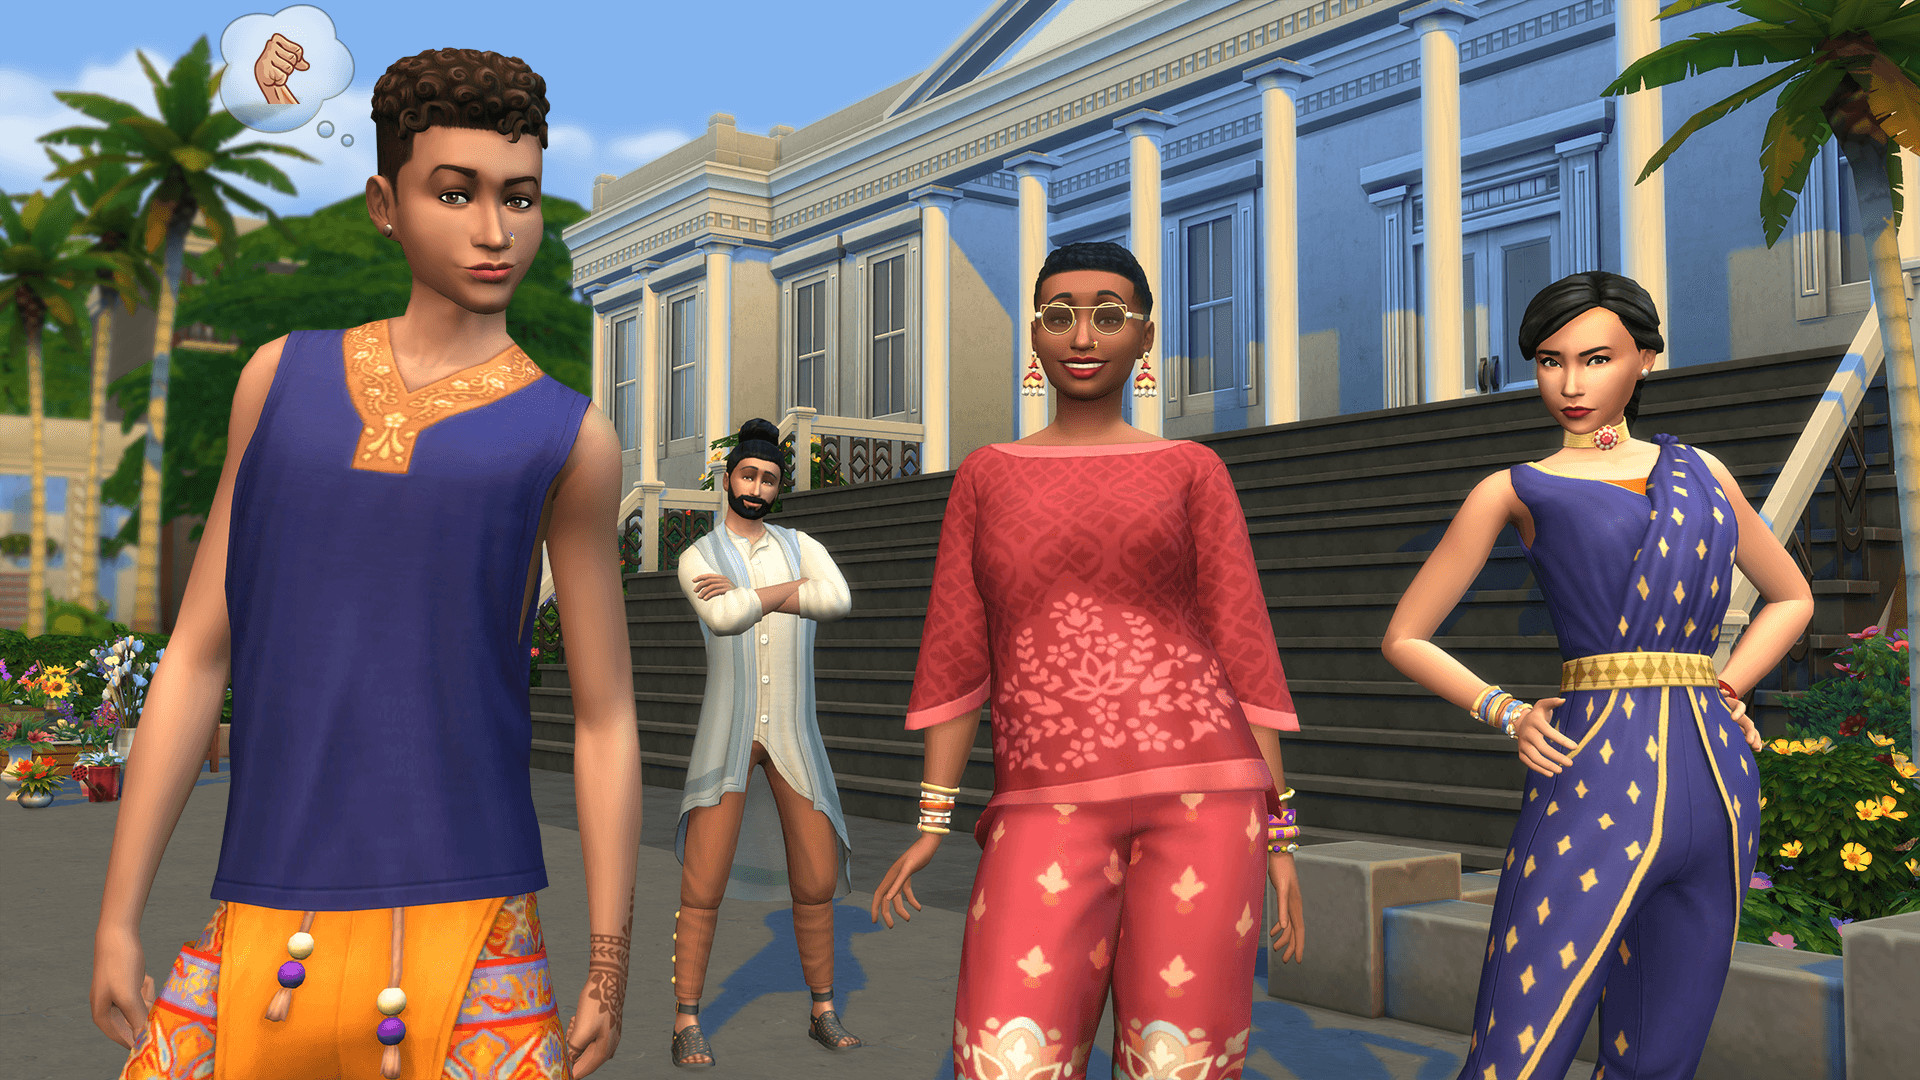 The Sims 4 - Fashion Street Kit DLC Origin CD Key 7.85 usd